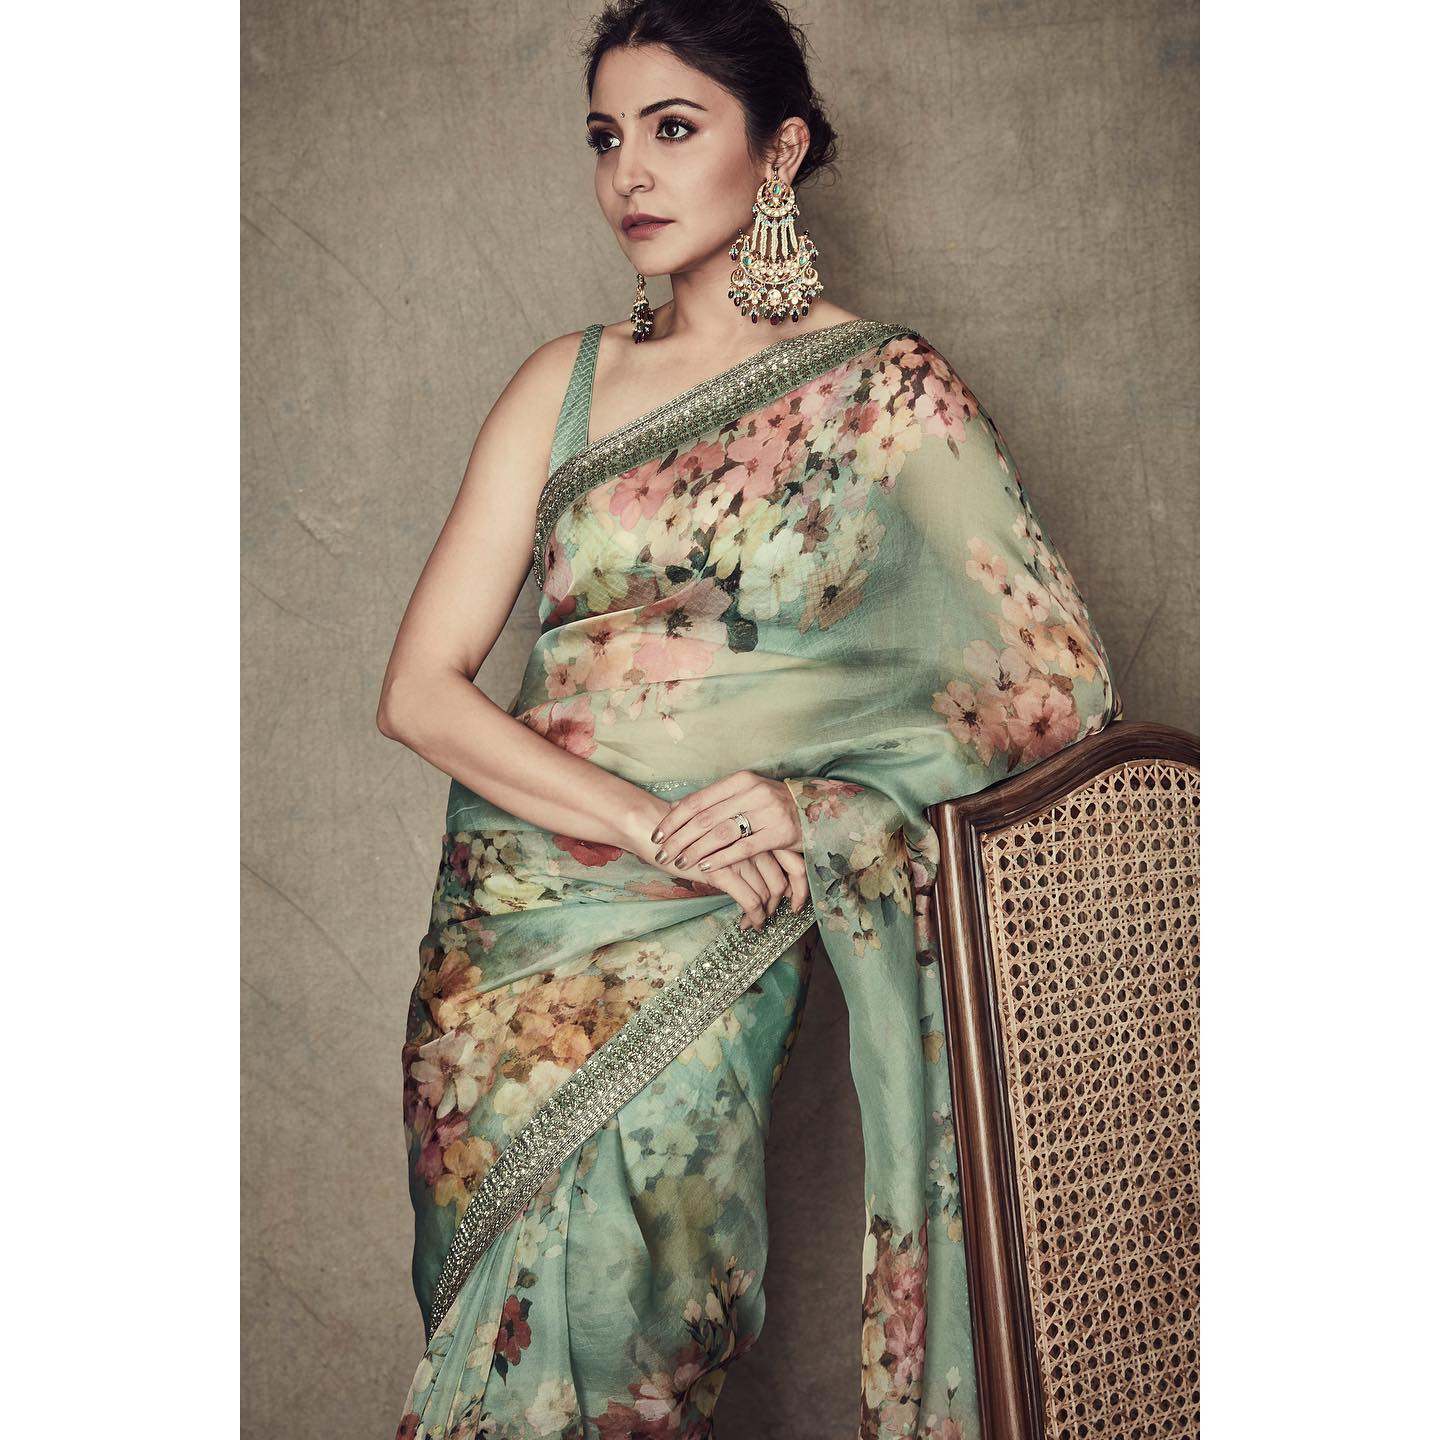 Anushka Sharma looked graceful in the floral saree